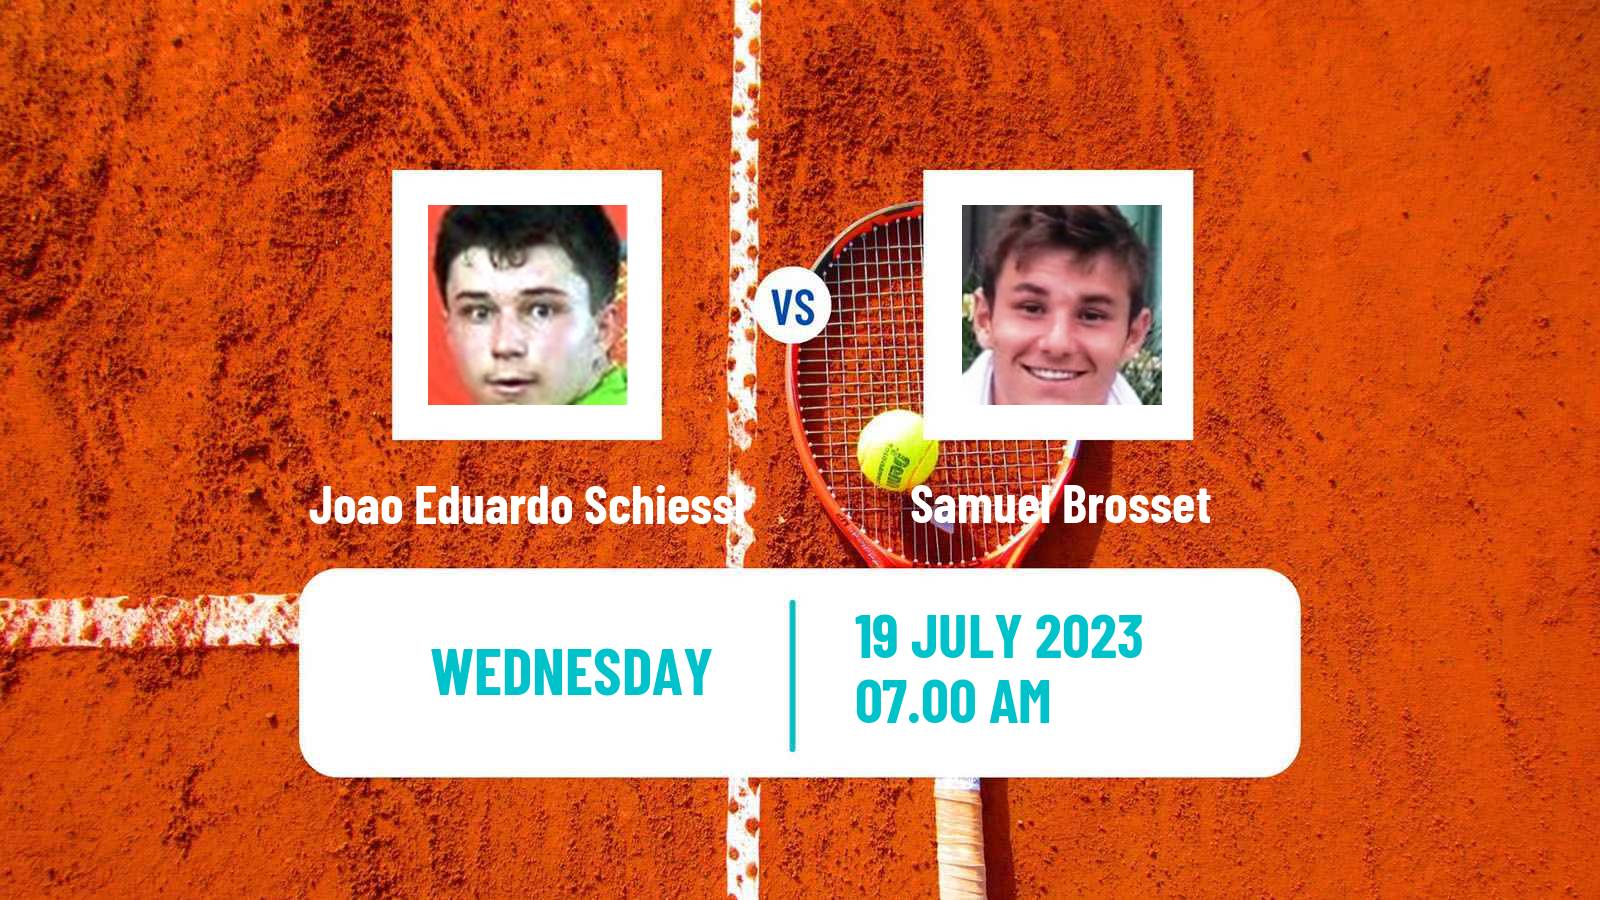 Tennis ITF M25 Esch Alzette 2 Men Joao Eduardo Schiessl - Samuel Brosset